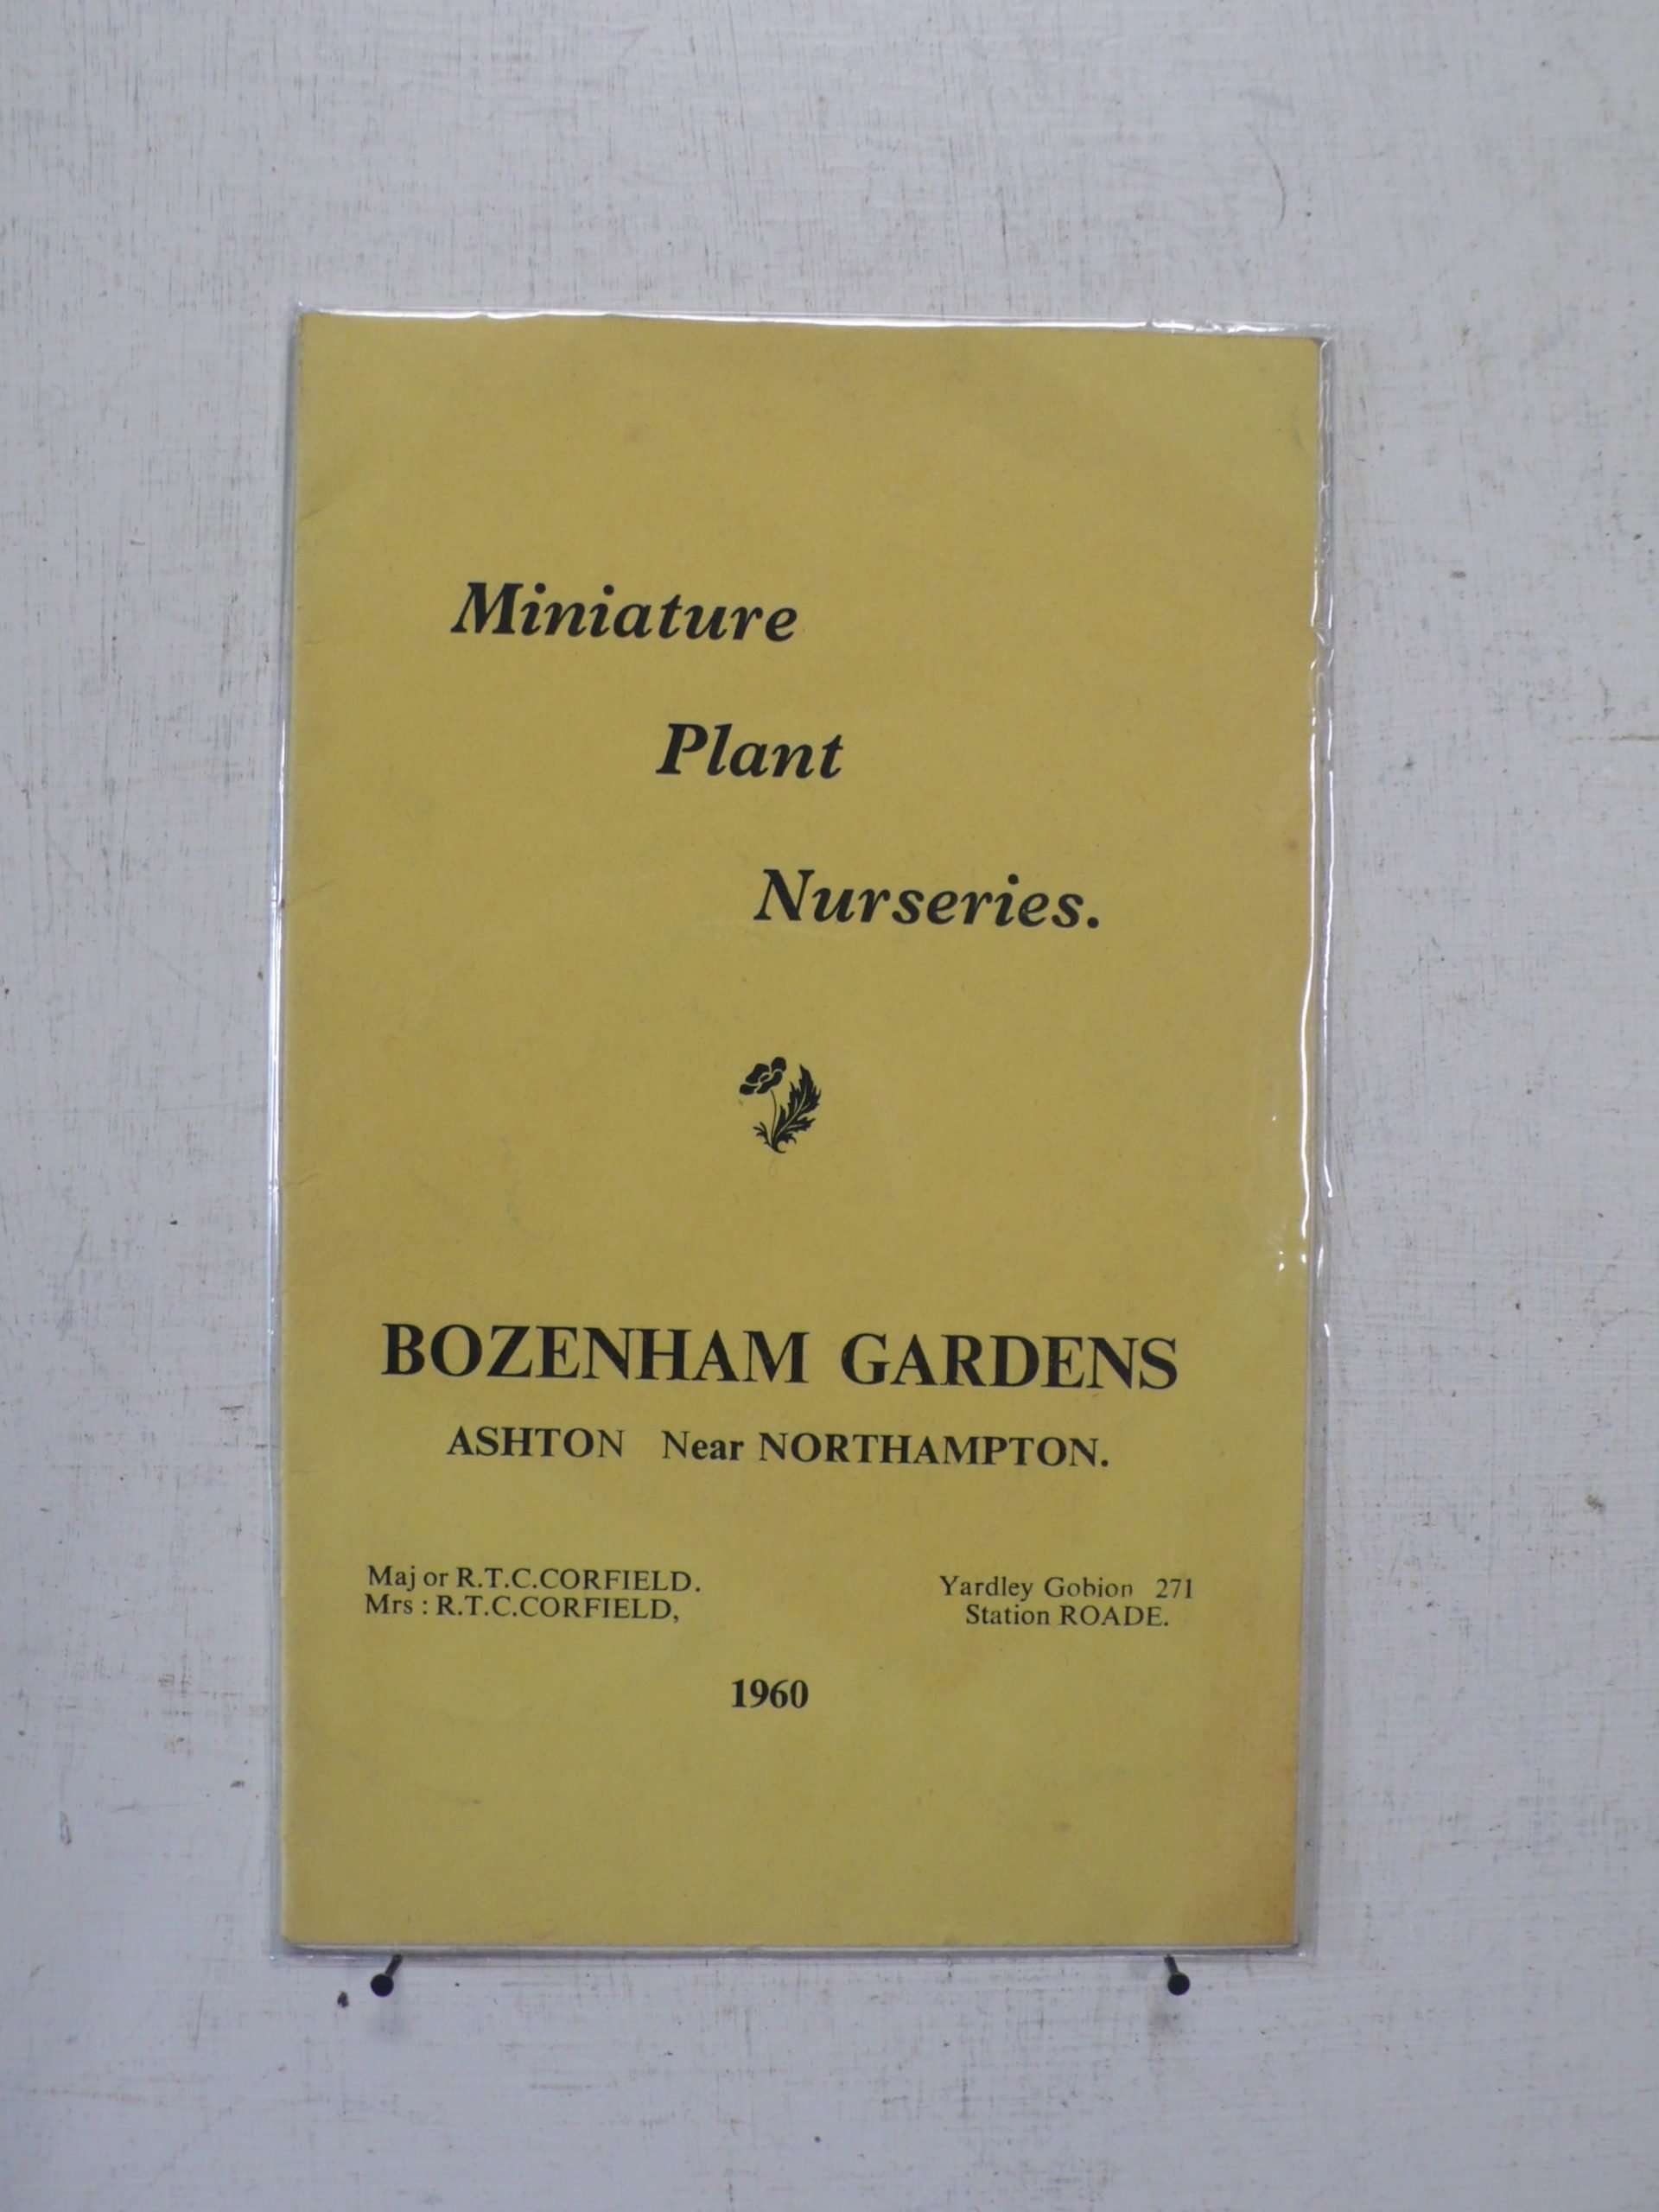 Miniature Plant Nurseries Catalogue